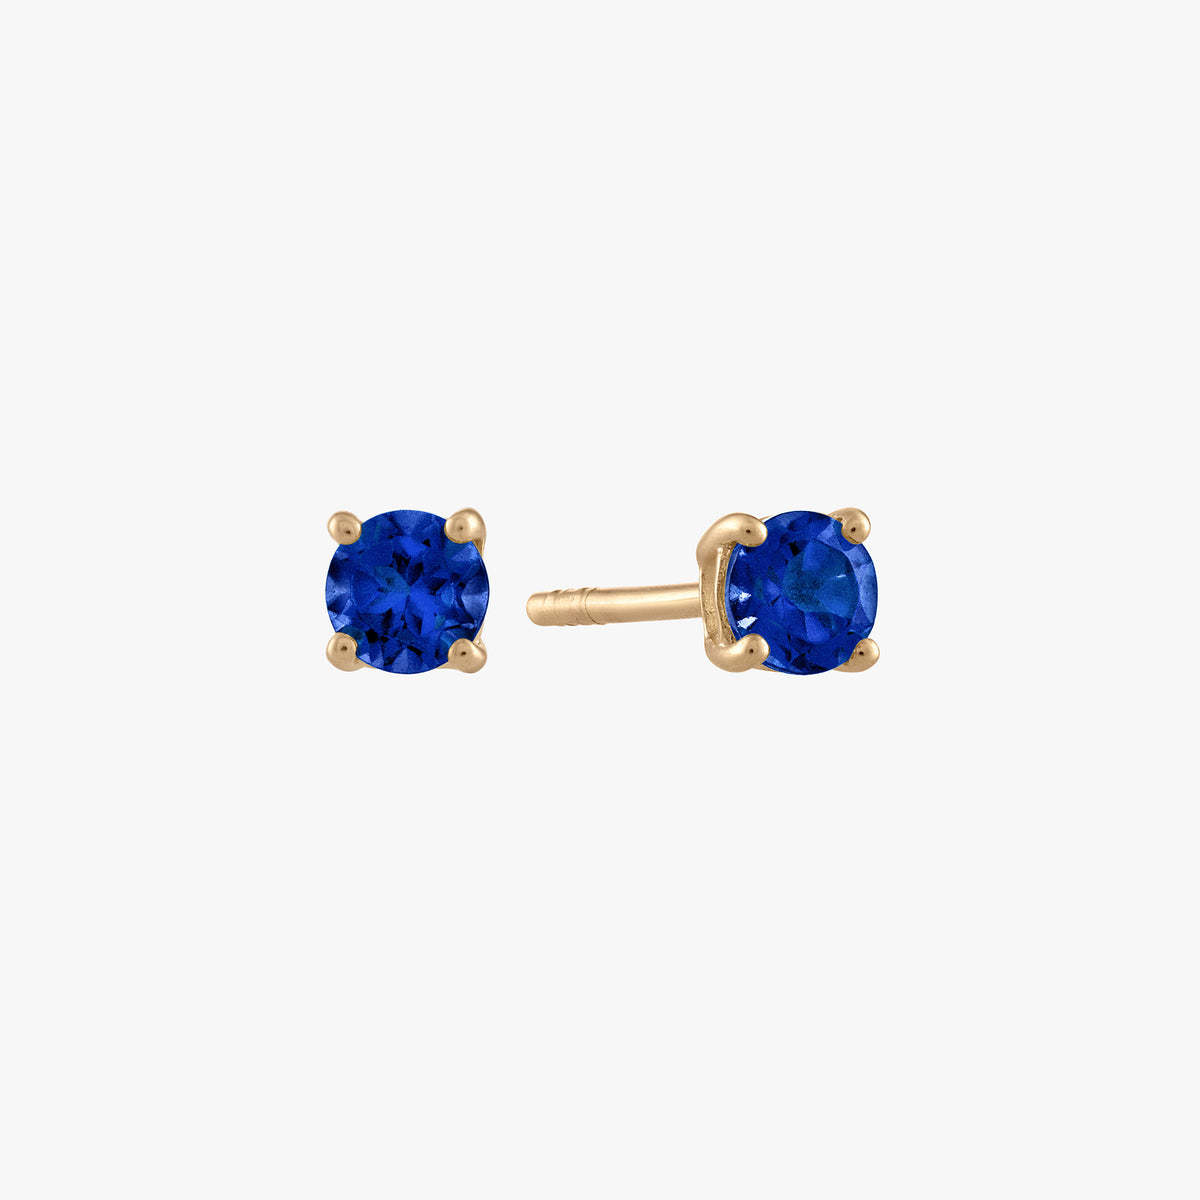 Sapphire Stud Earrings Pair Gold Hardware 